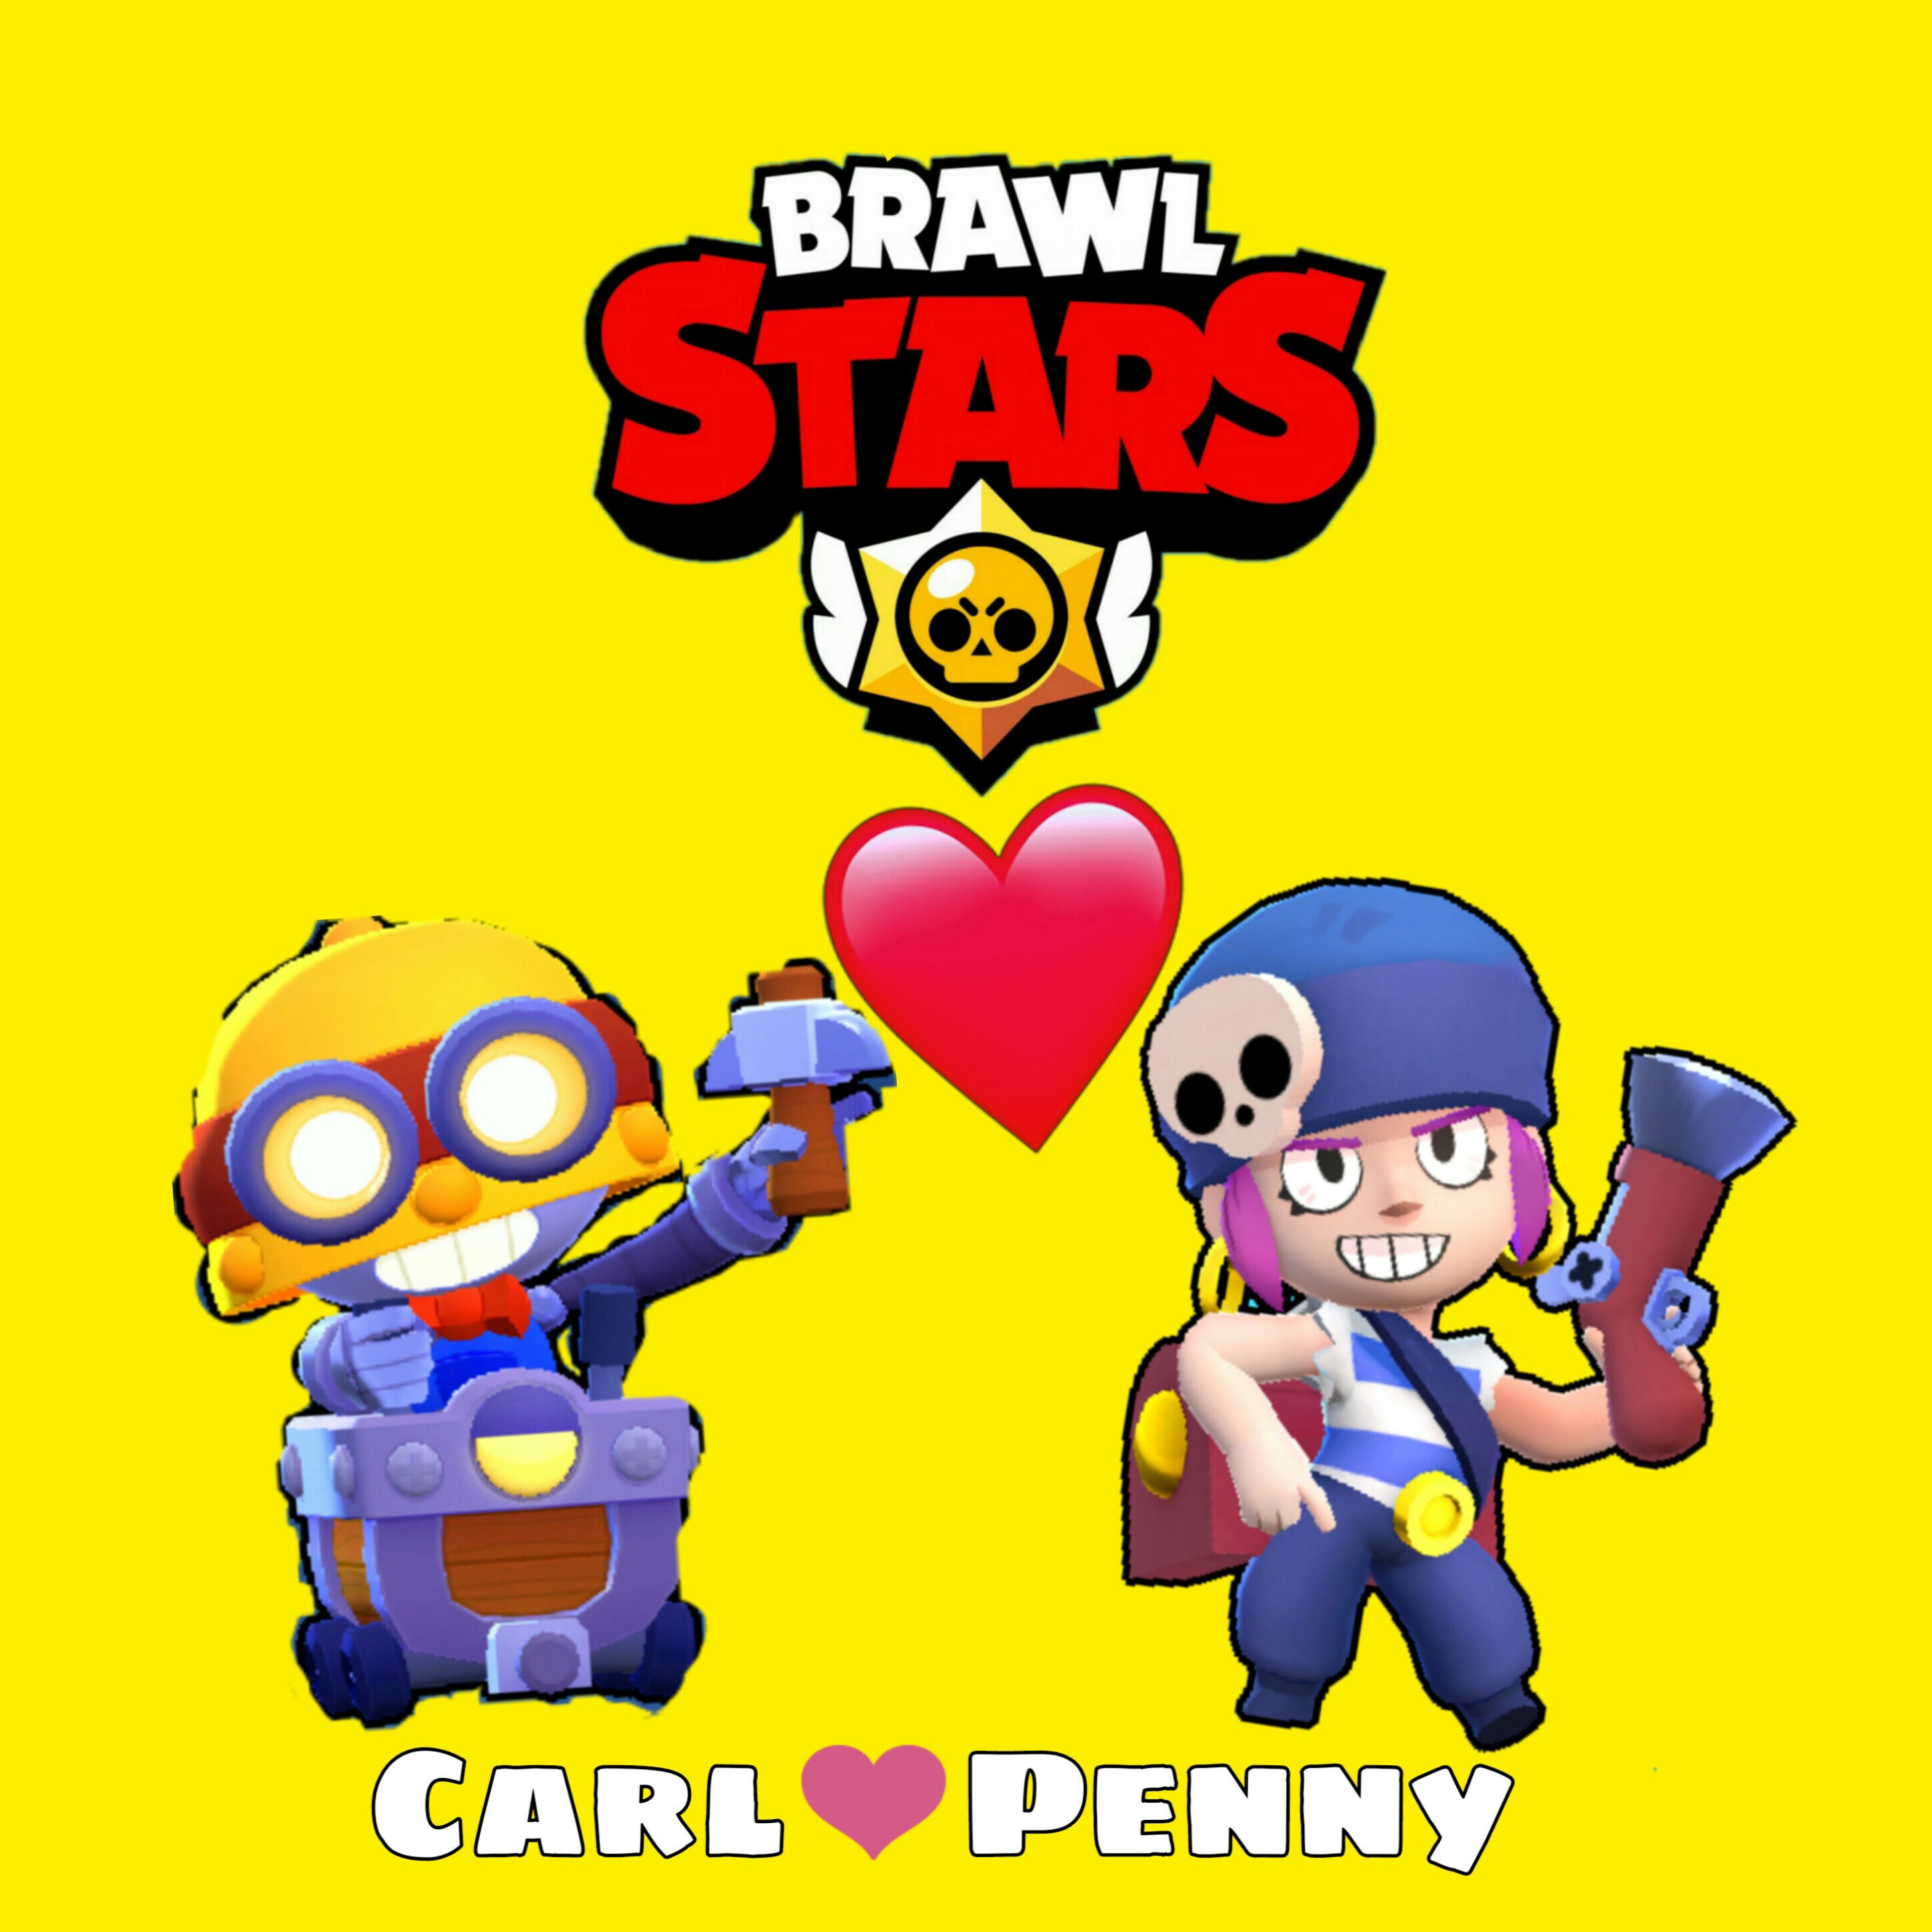 Brawlstars Carl Penny Image By Selin Kiraz - brawl stars carl vs penny